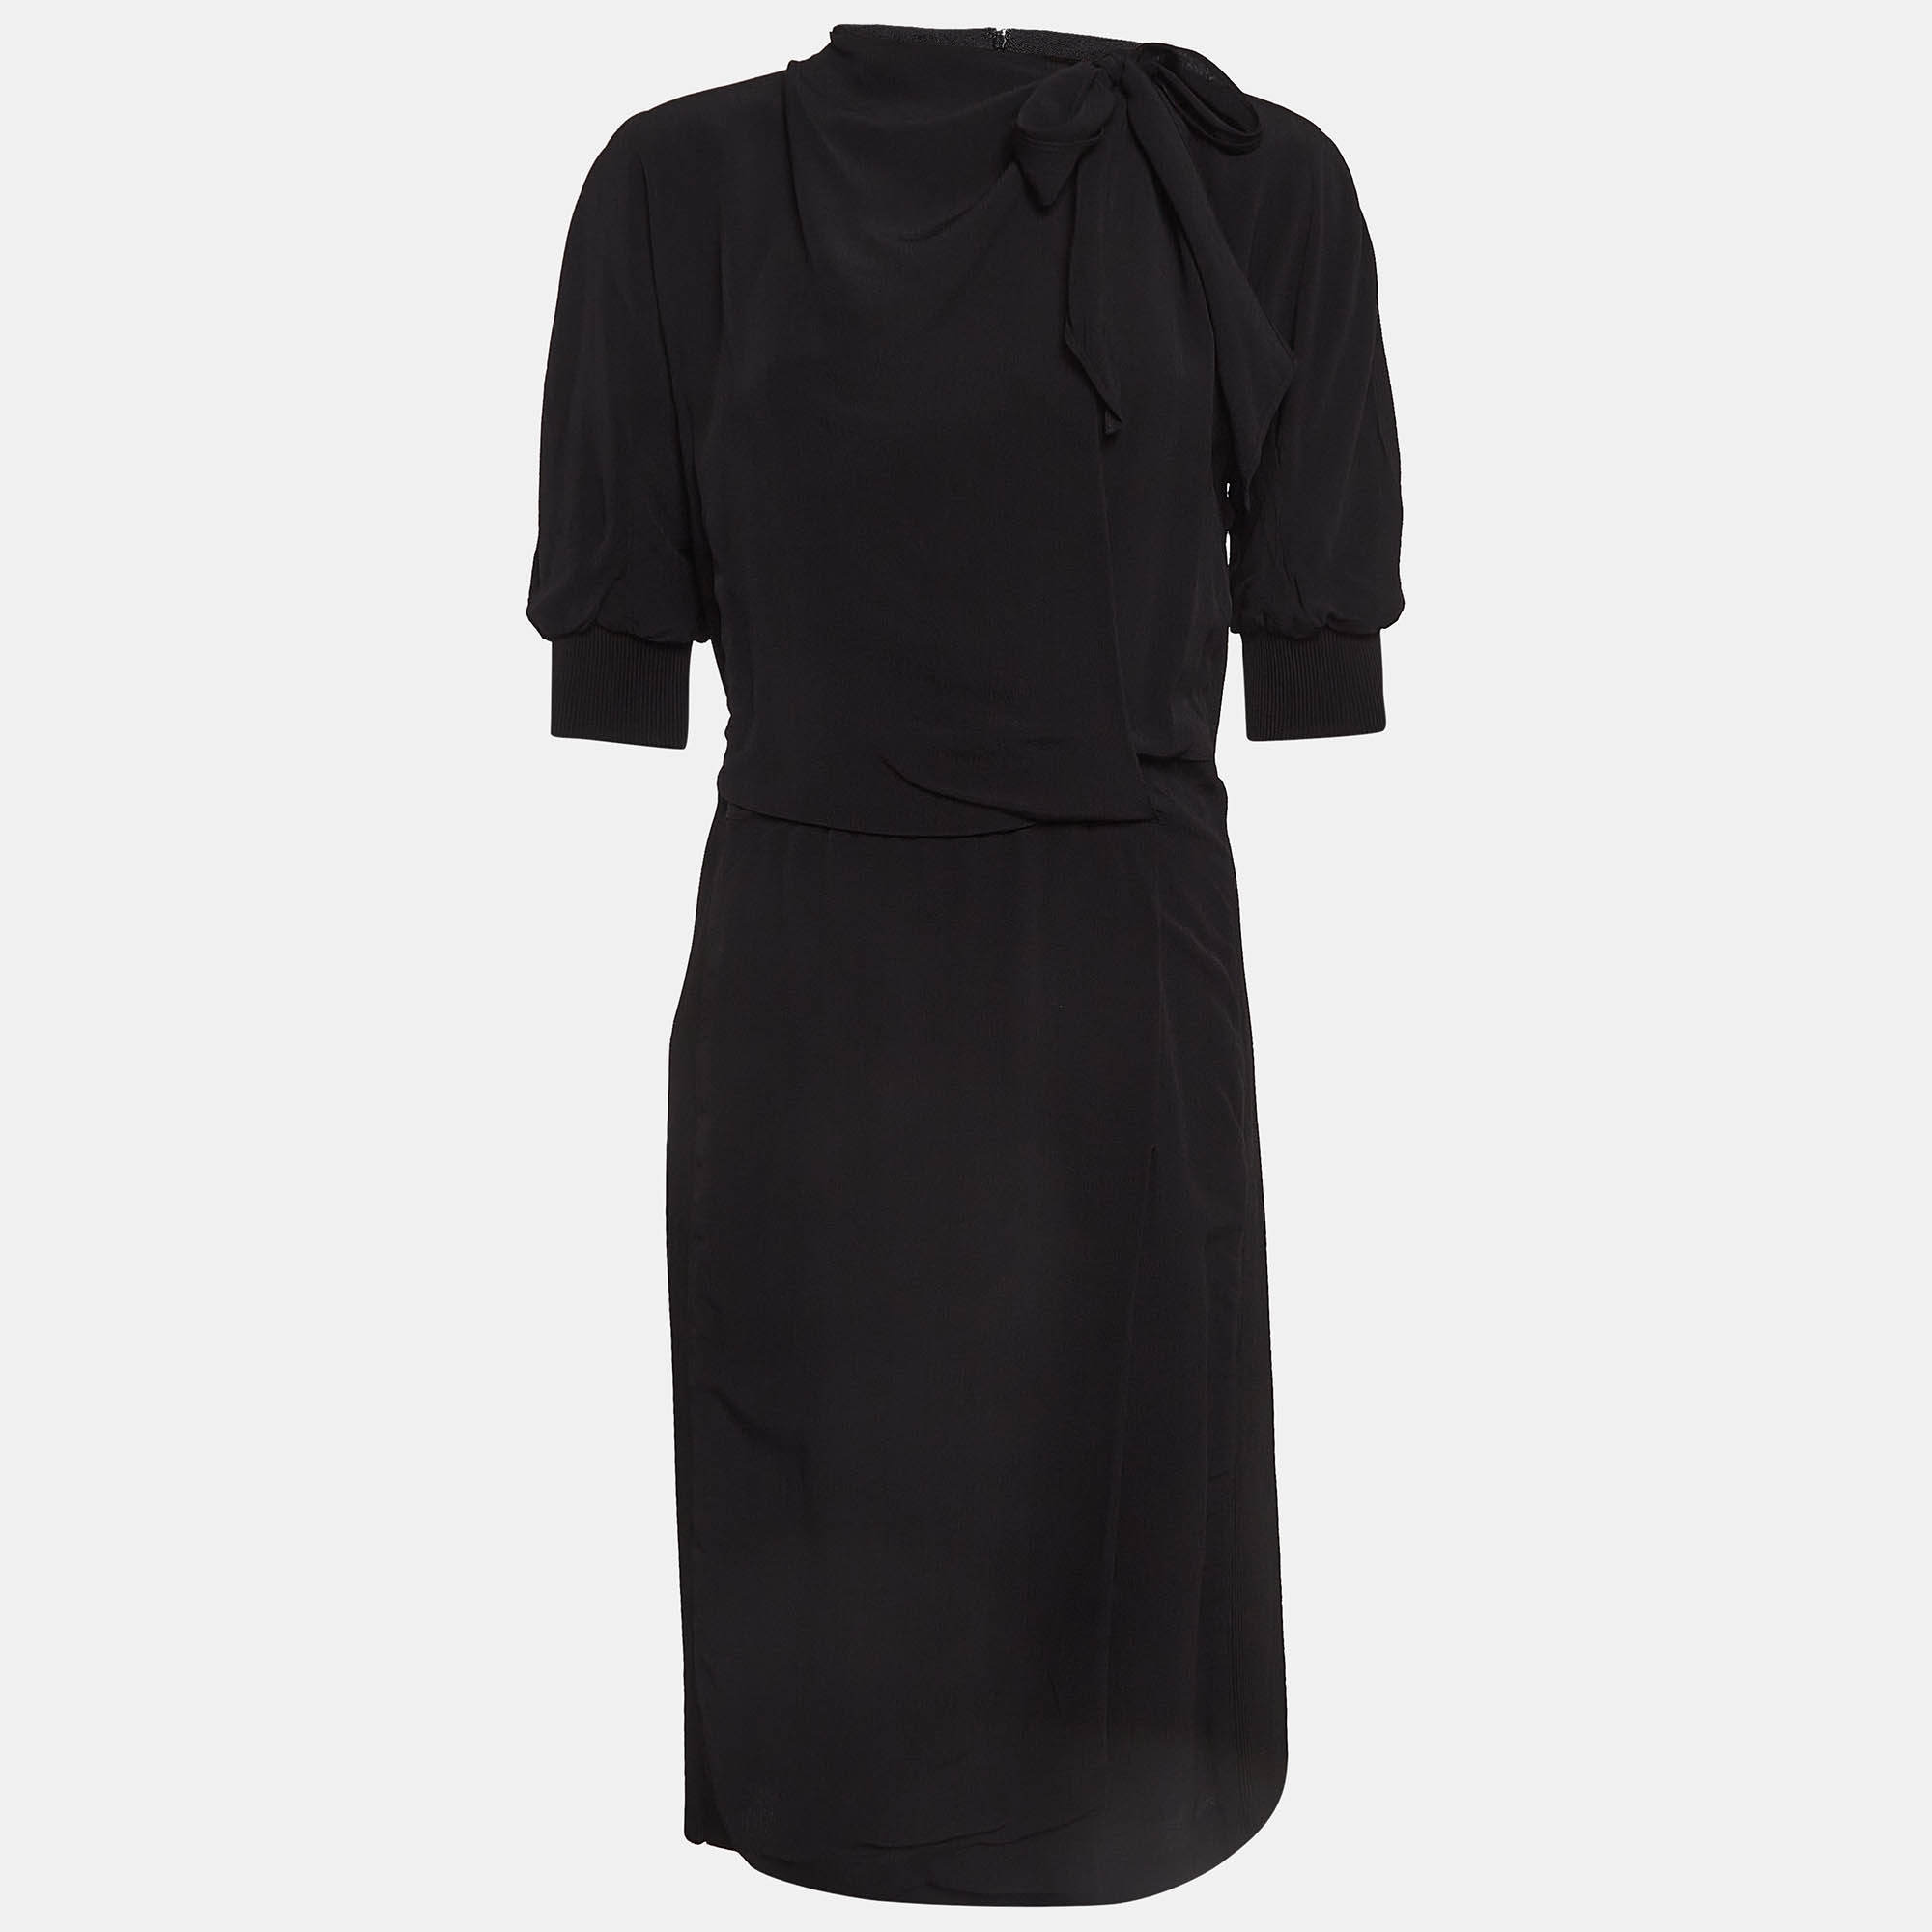 

Burberry Black Georgette Tie-up Neck Short Dress S